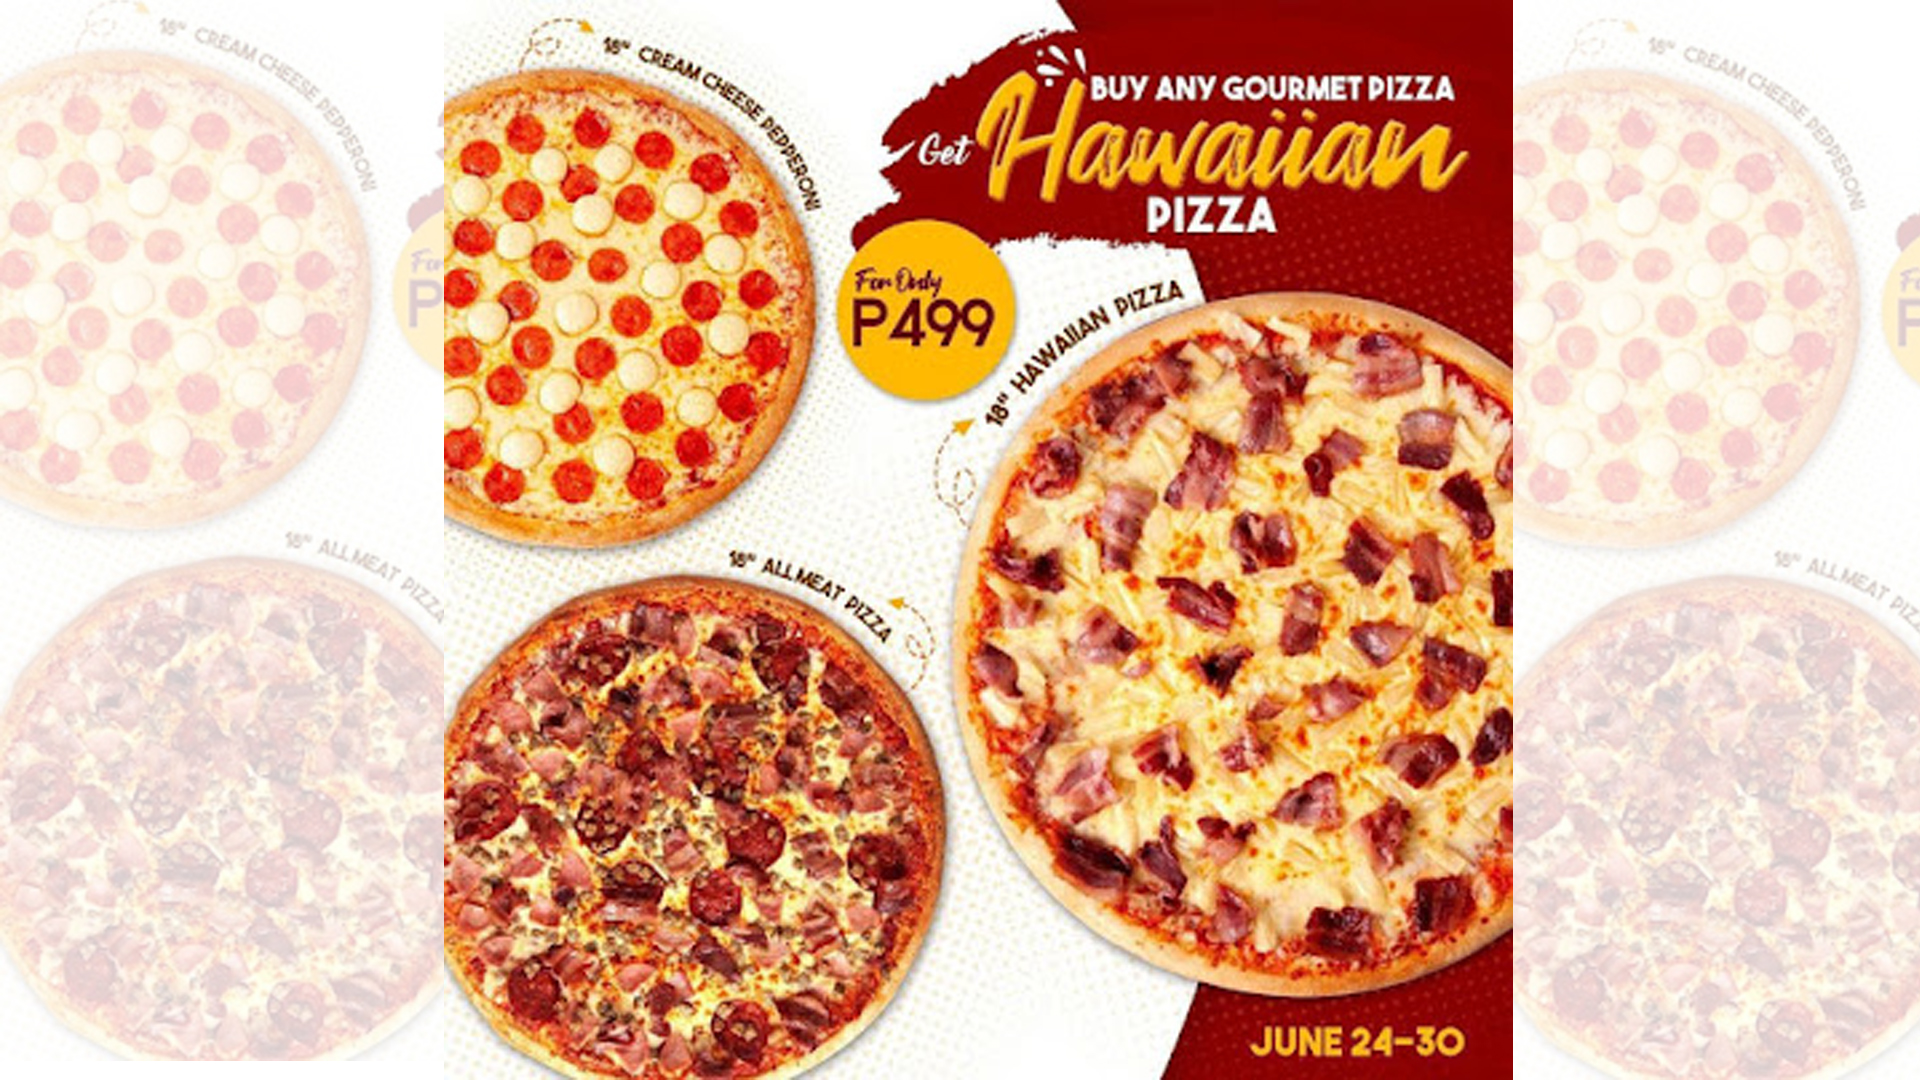 snr-new-york style pizza promo june 2022.jpg, Jun 2022